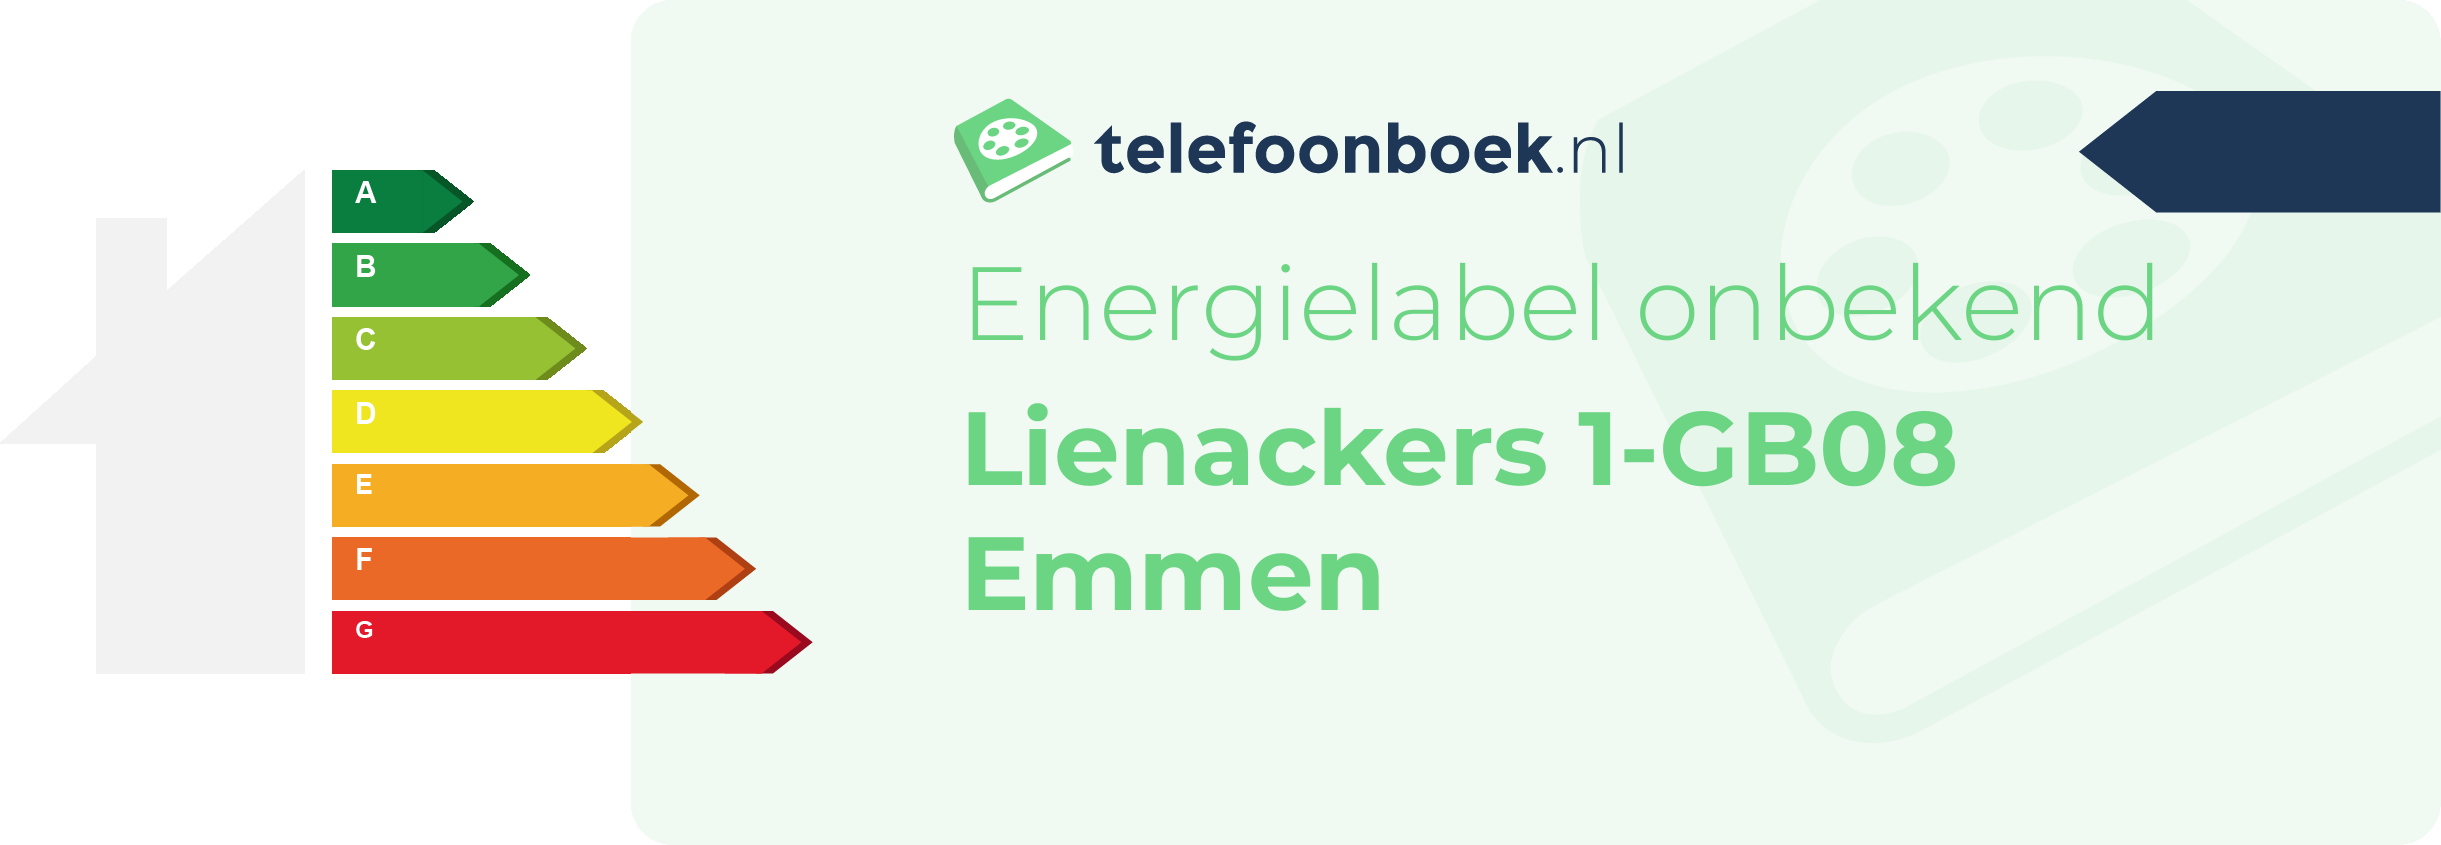 Energielabel Lienackers 1-GB08 Emmen